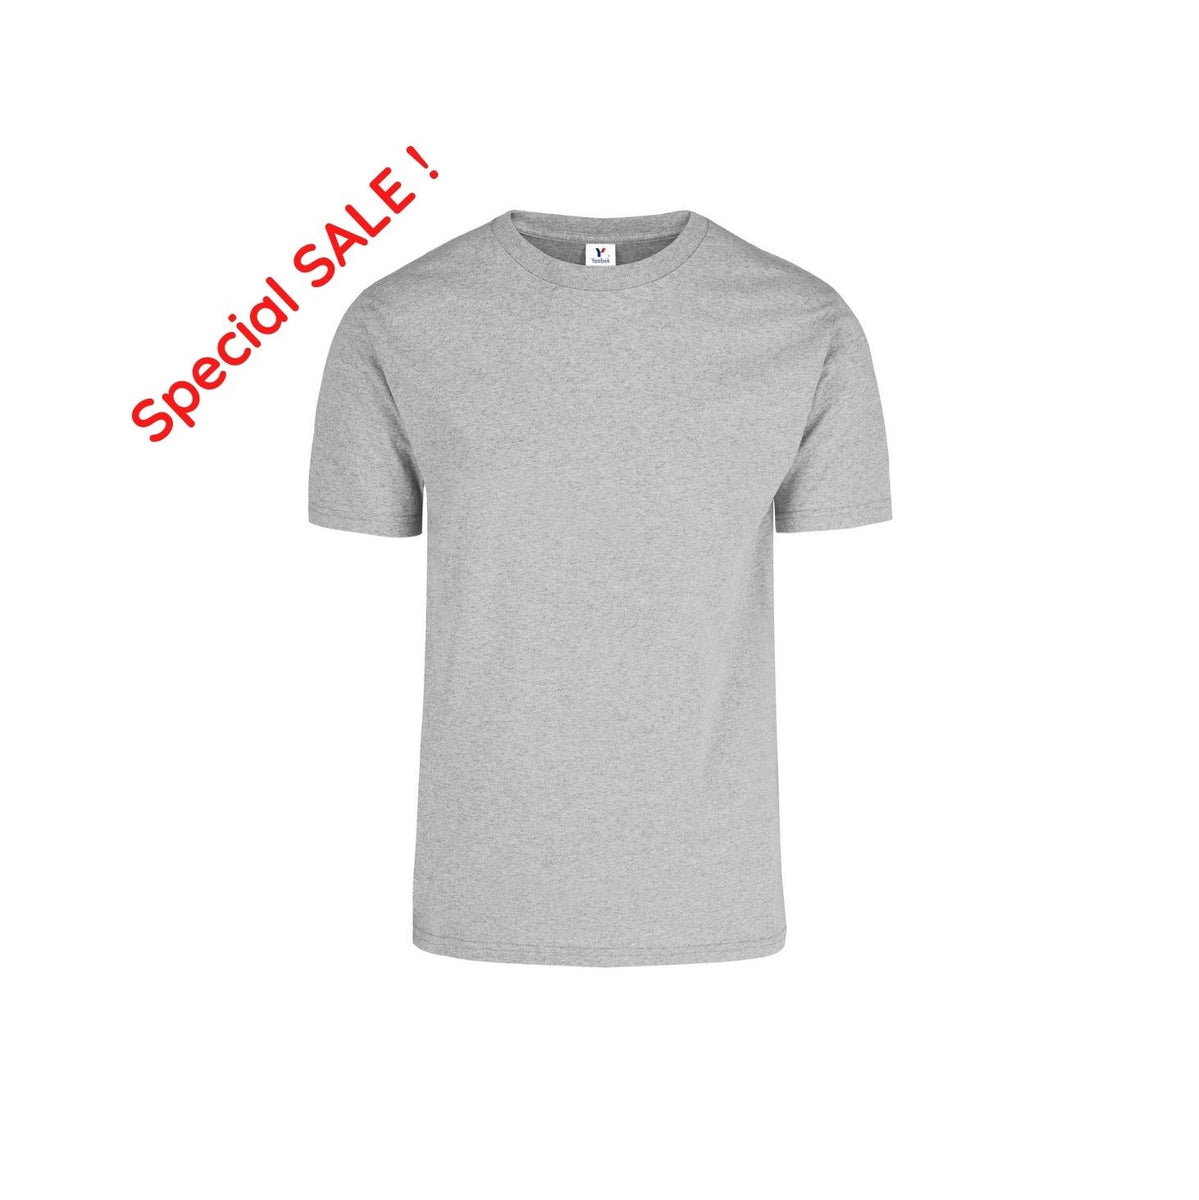 Mizzou Nursing Grey Crew Neck T-Shirt Adult Small Grey - Oxford